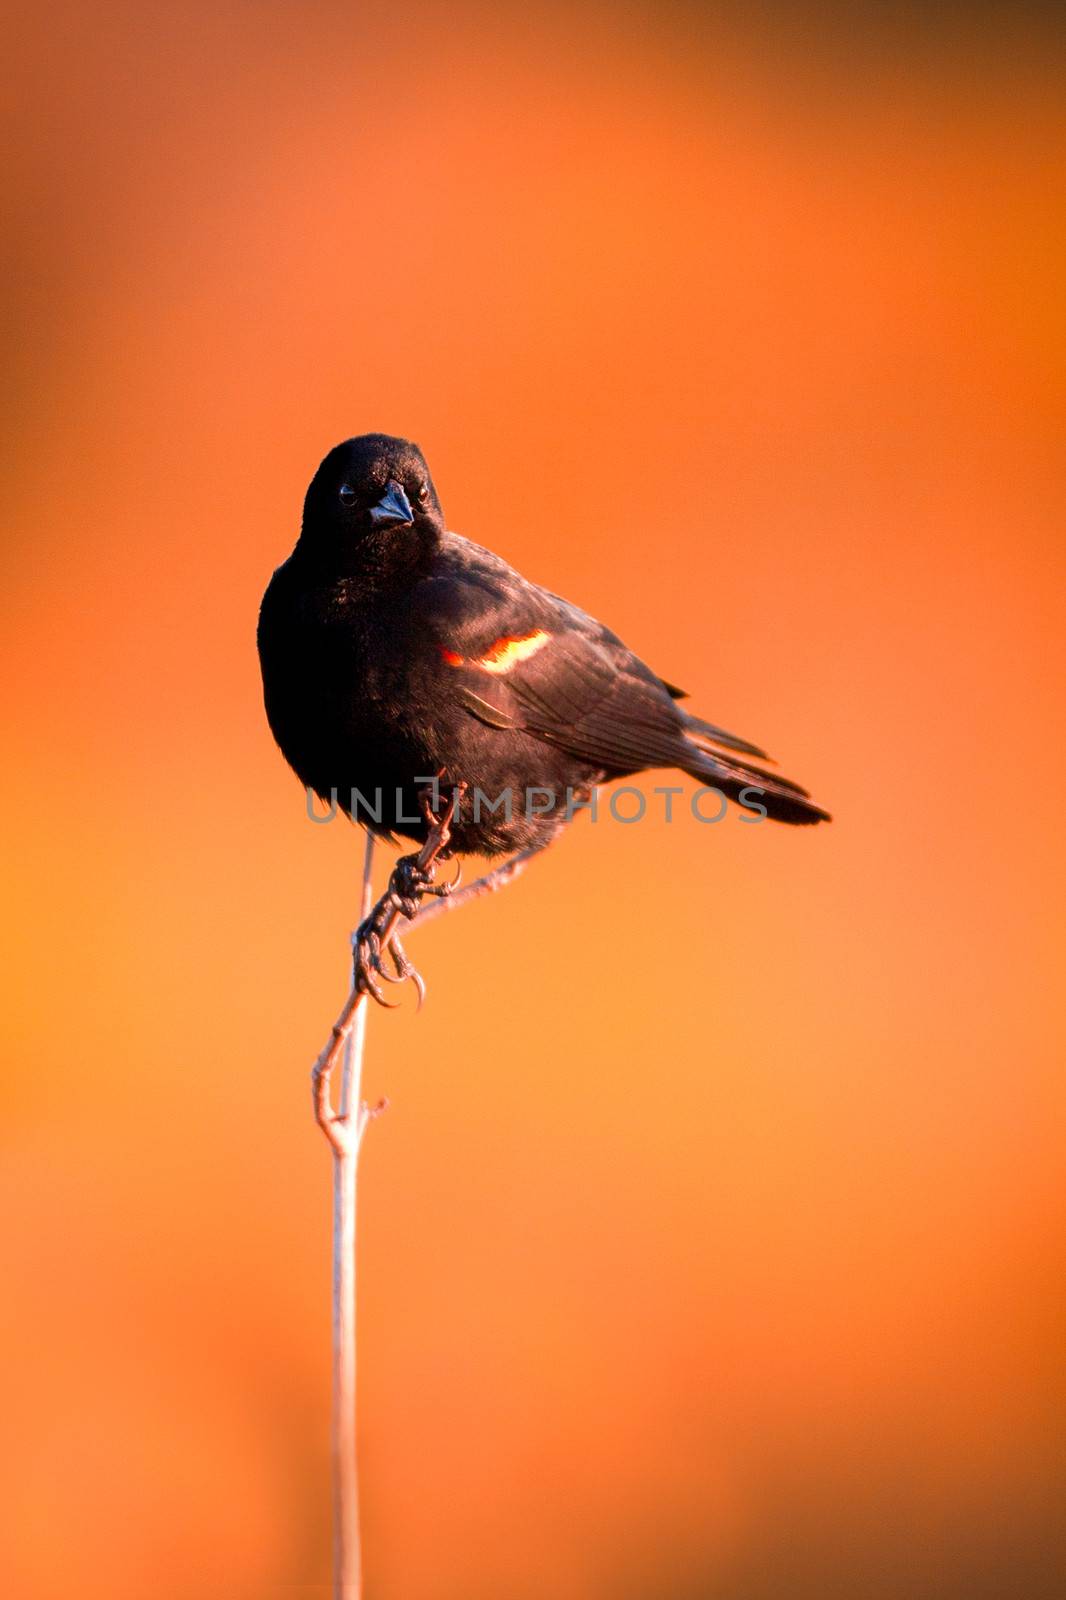 Blackbird perched on plant stem with orange background.